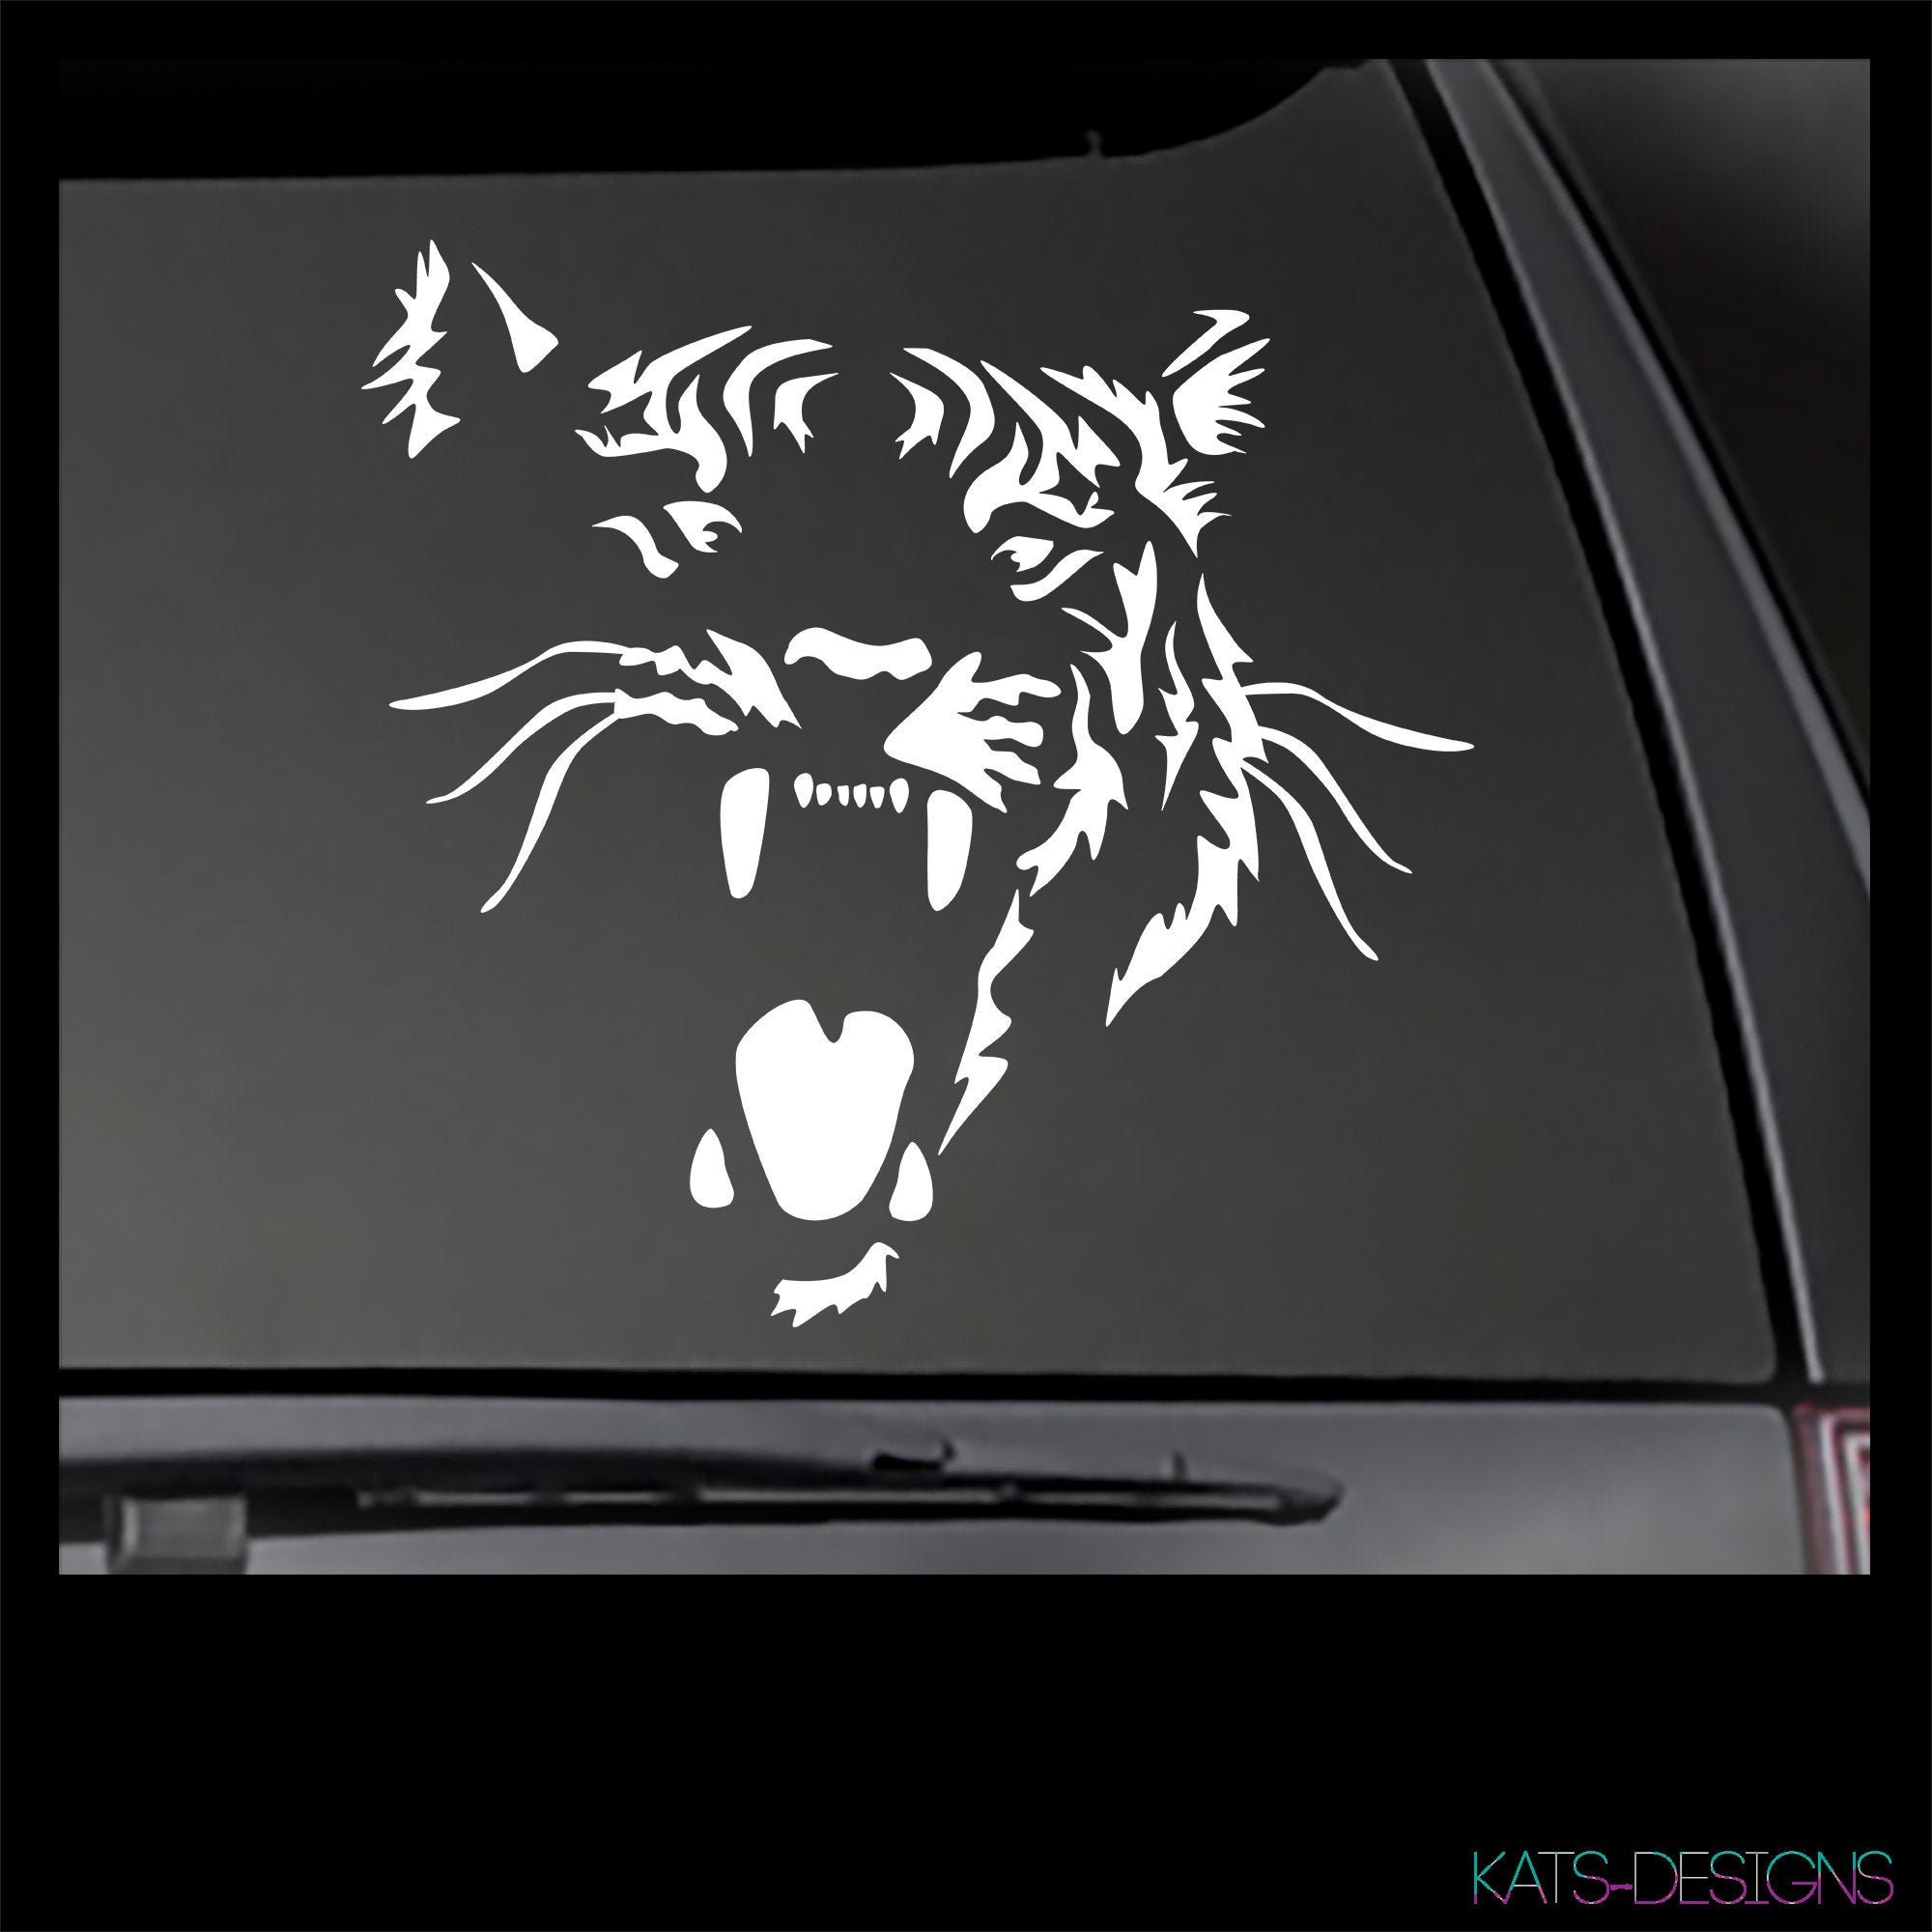 Tiger Car Sticker Cool Decals Vinyl Waterproof Auto Tuning Styling Black